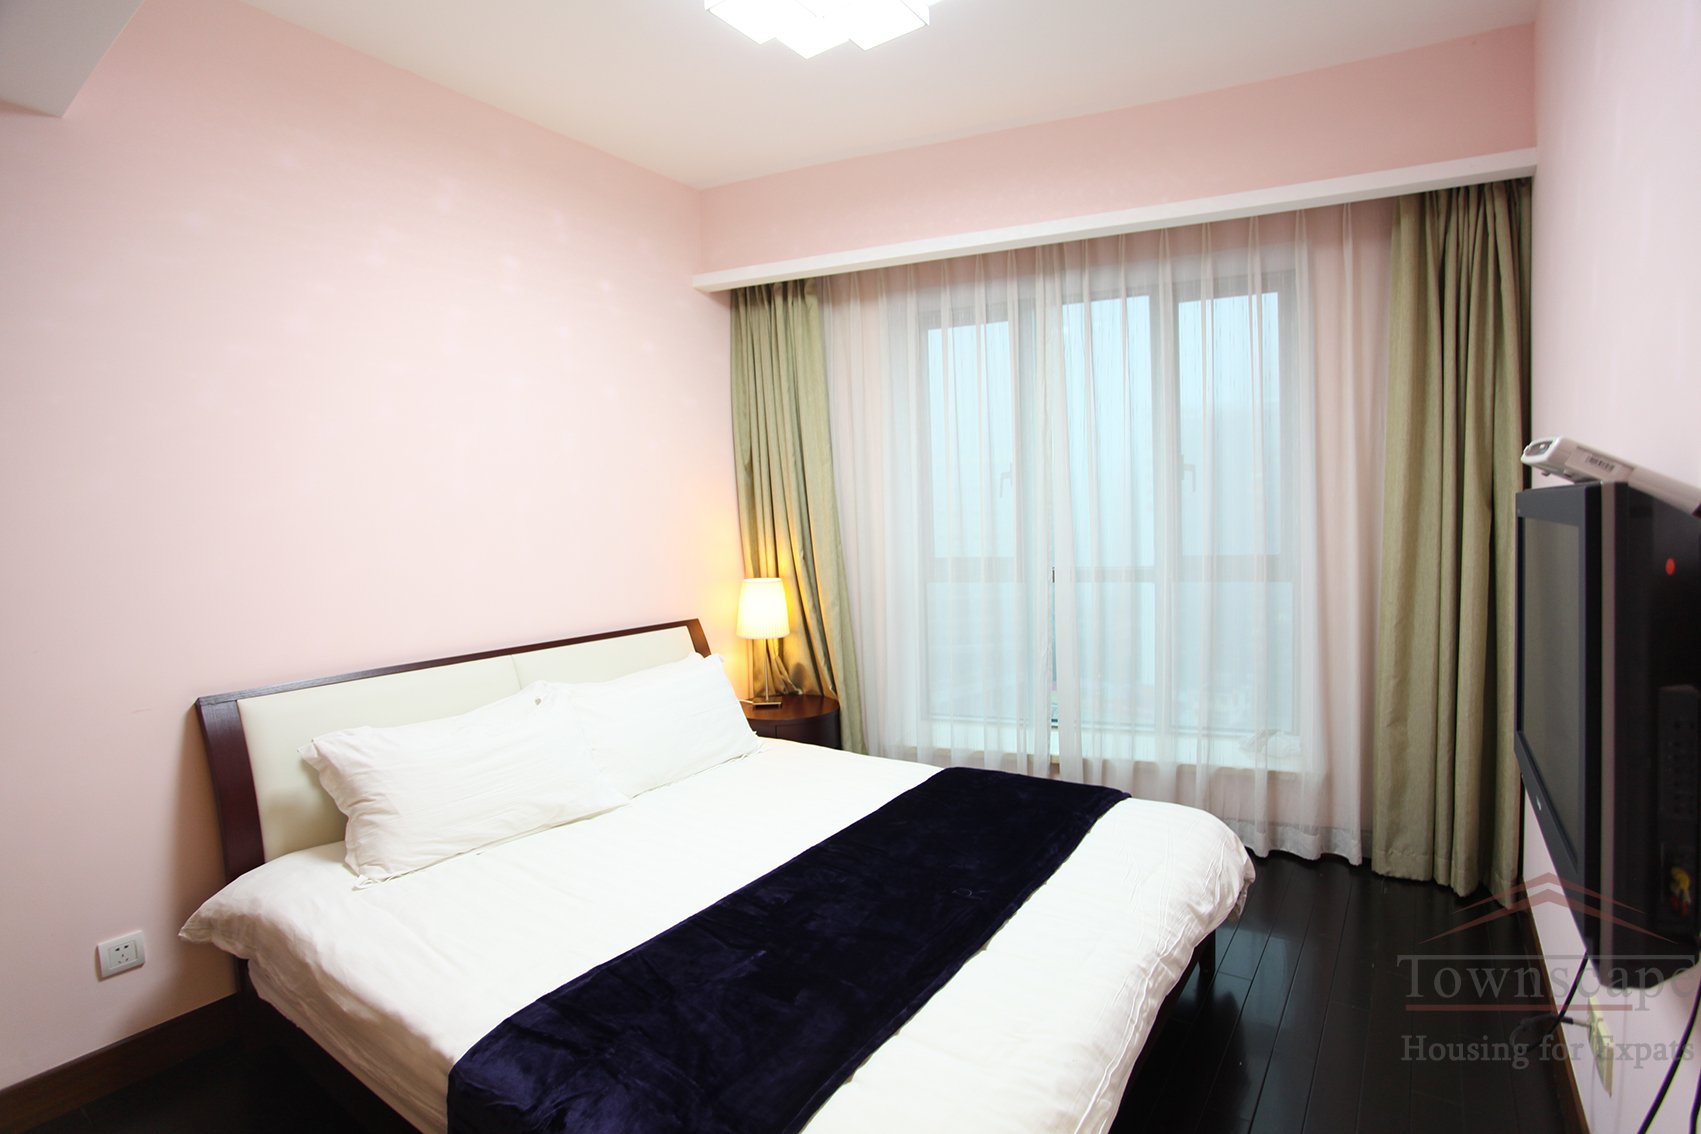 West nanjing road apartment rentals Elegant 2BR Apartment for rent in Jingan Four Seasons above West Nanjing Rd